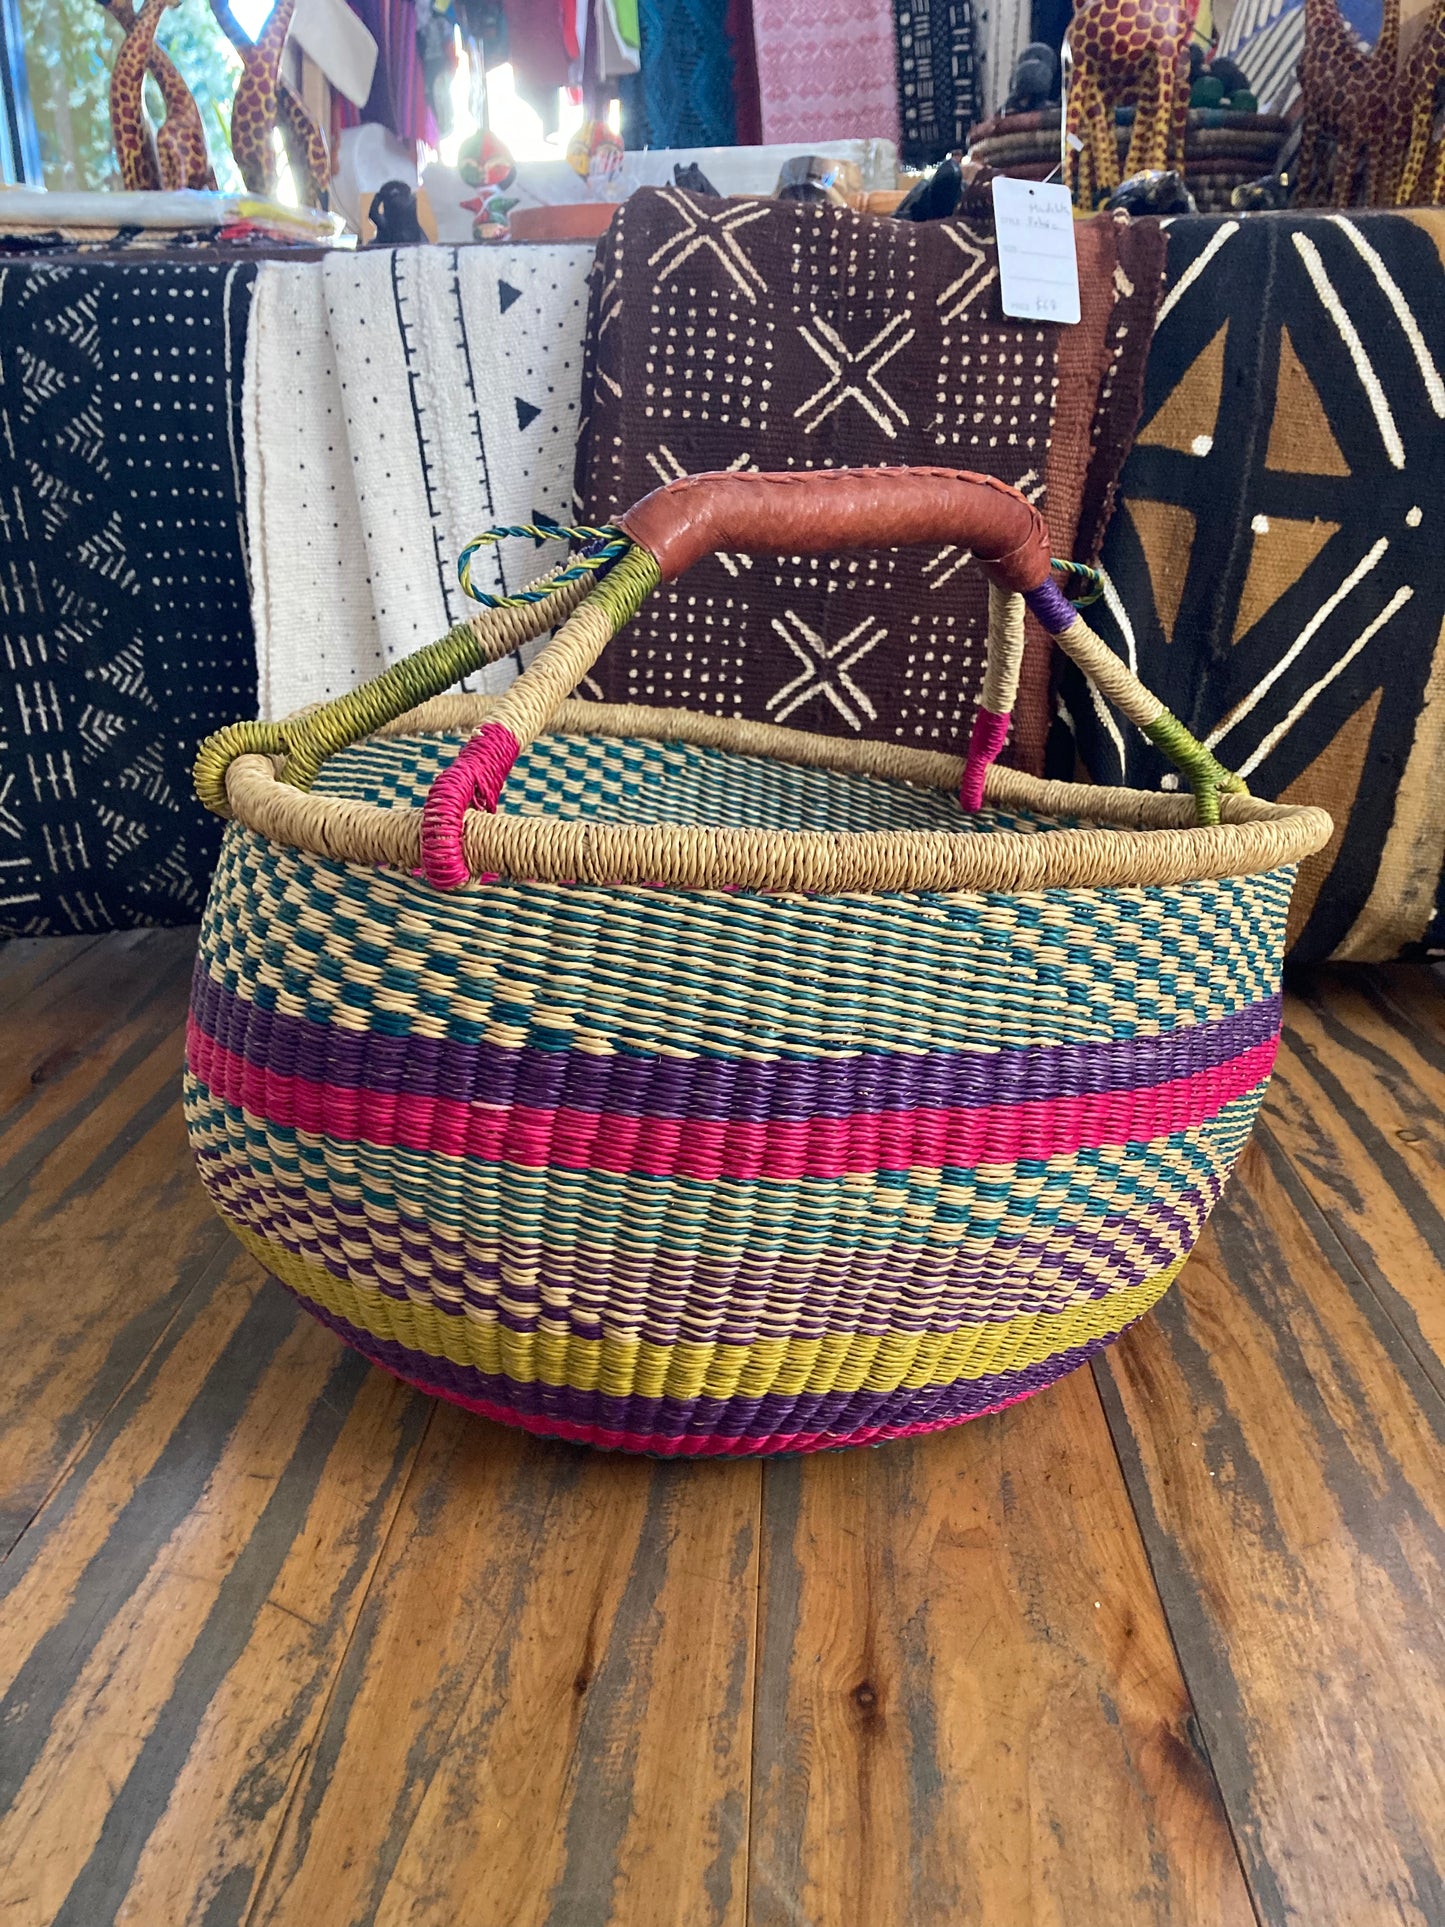 Baskets bundle